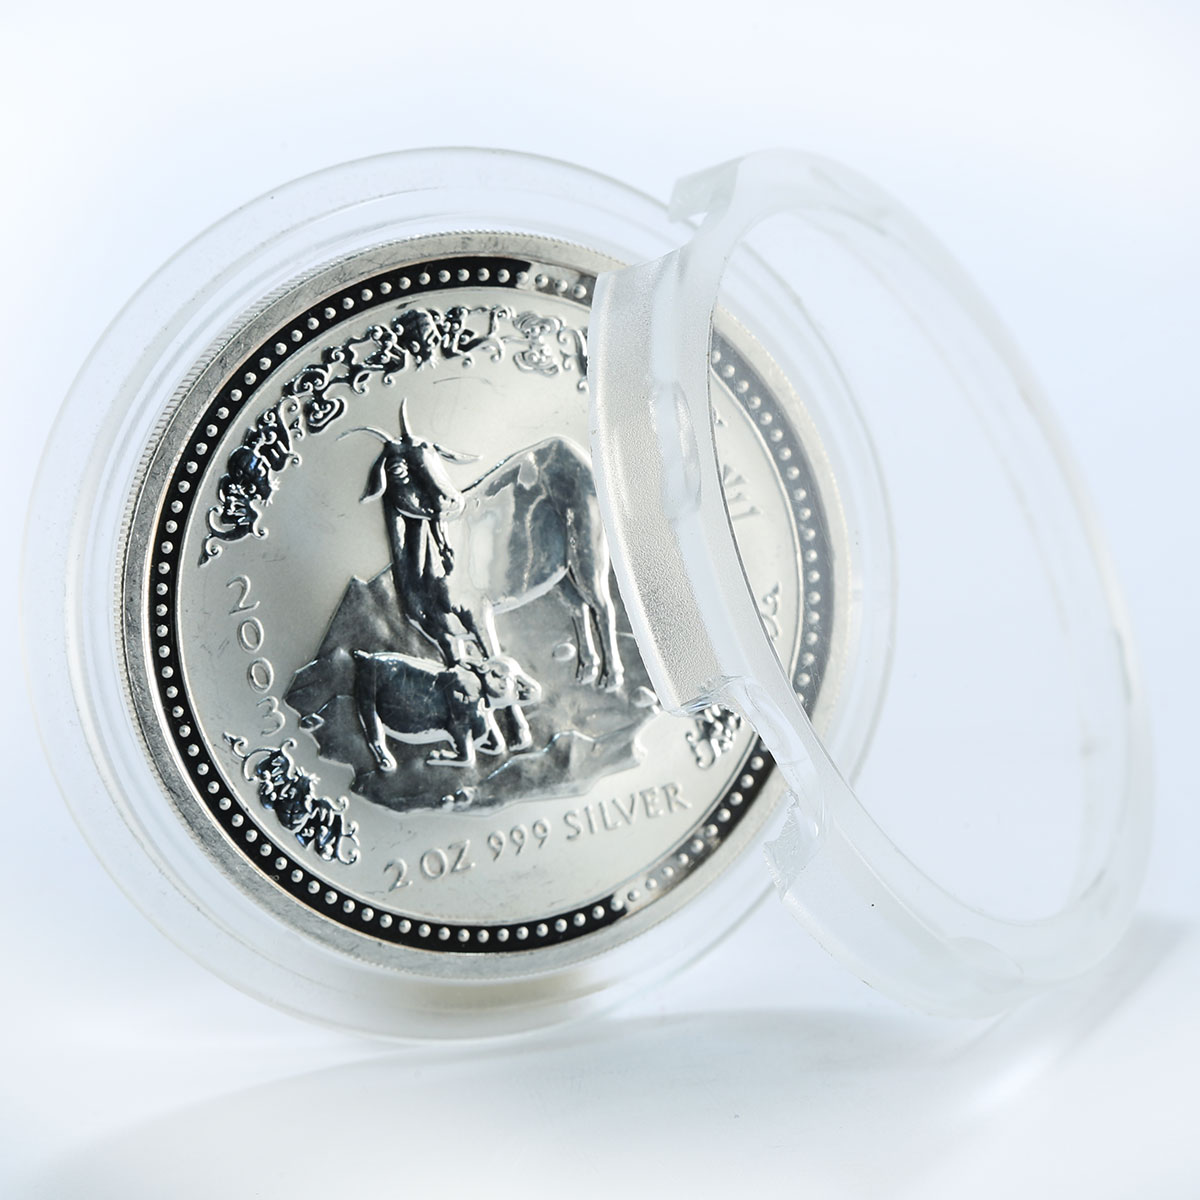 Australia 2 dollars Year of The Goat Lunar Series I 2 oz Silver Coin 2003